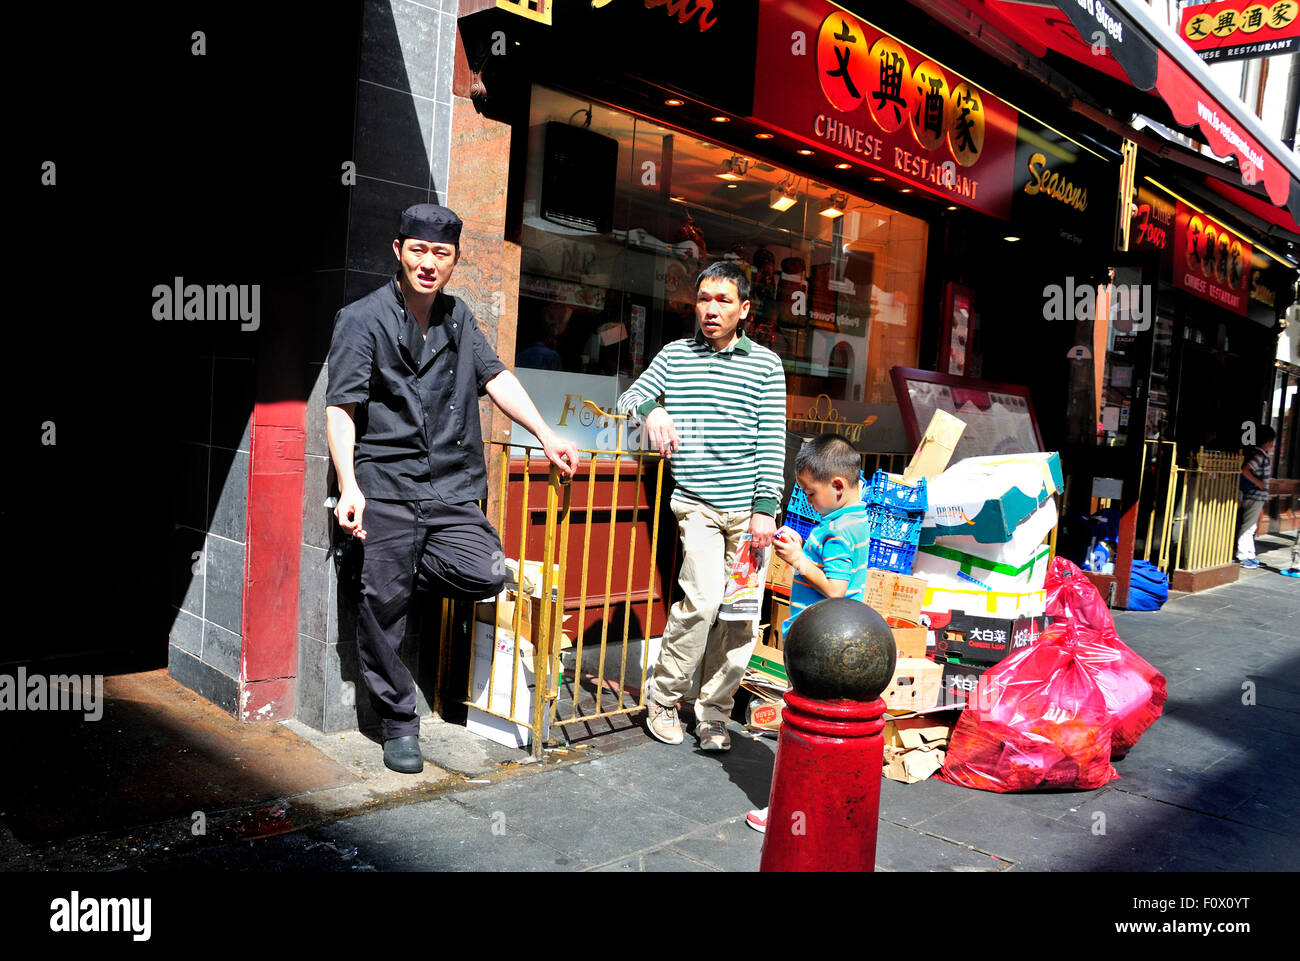 London, England, UK. Gerrard Street, Chinatown. Men talking and smoking outside a restaurant Stock Photo